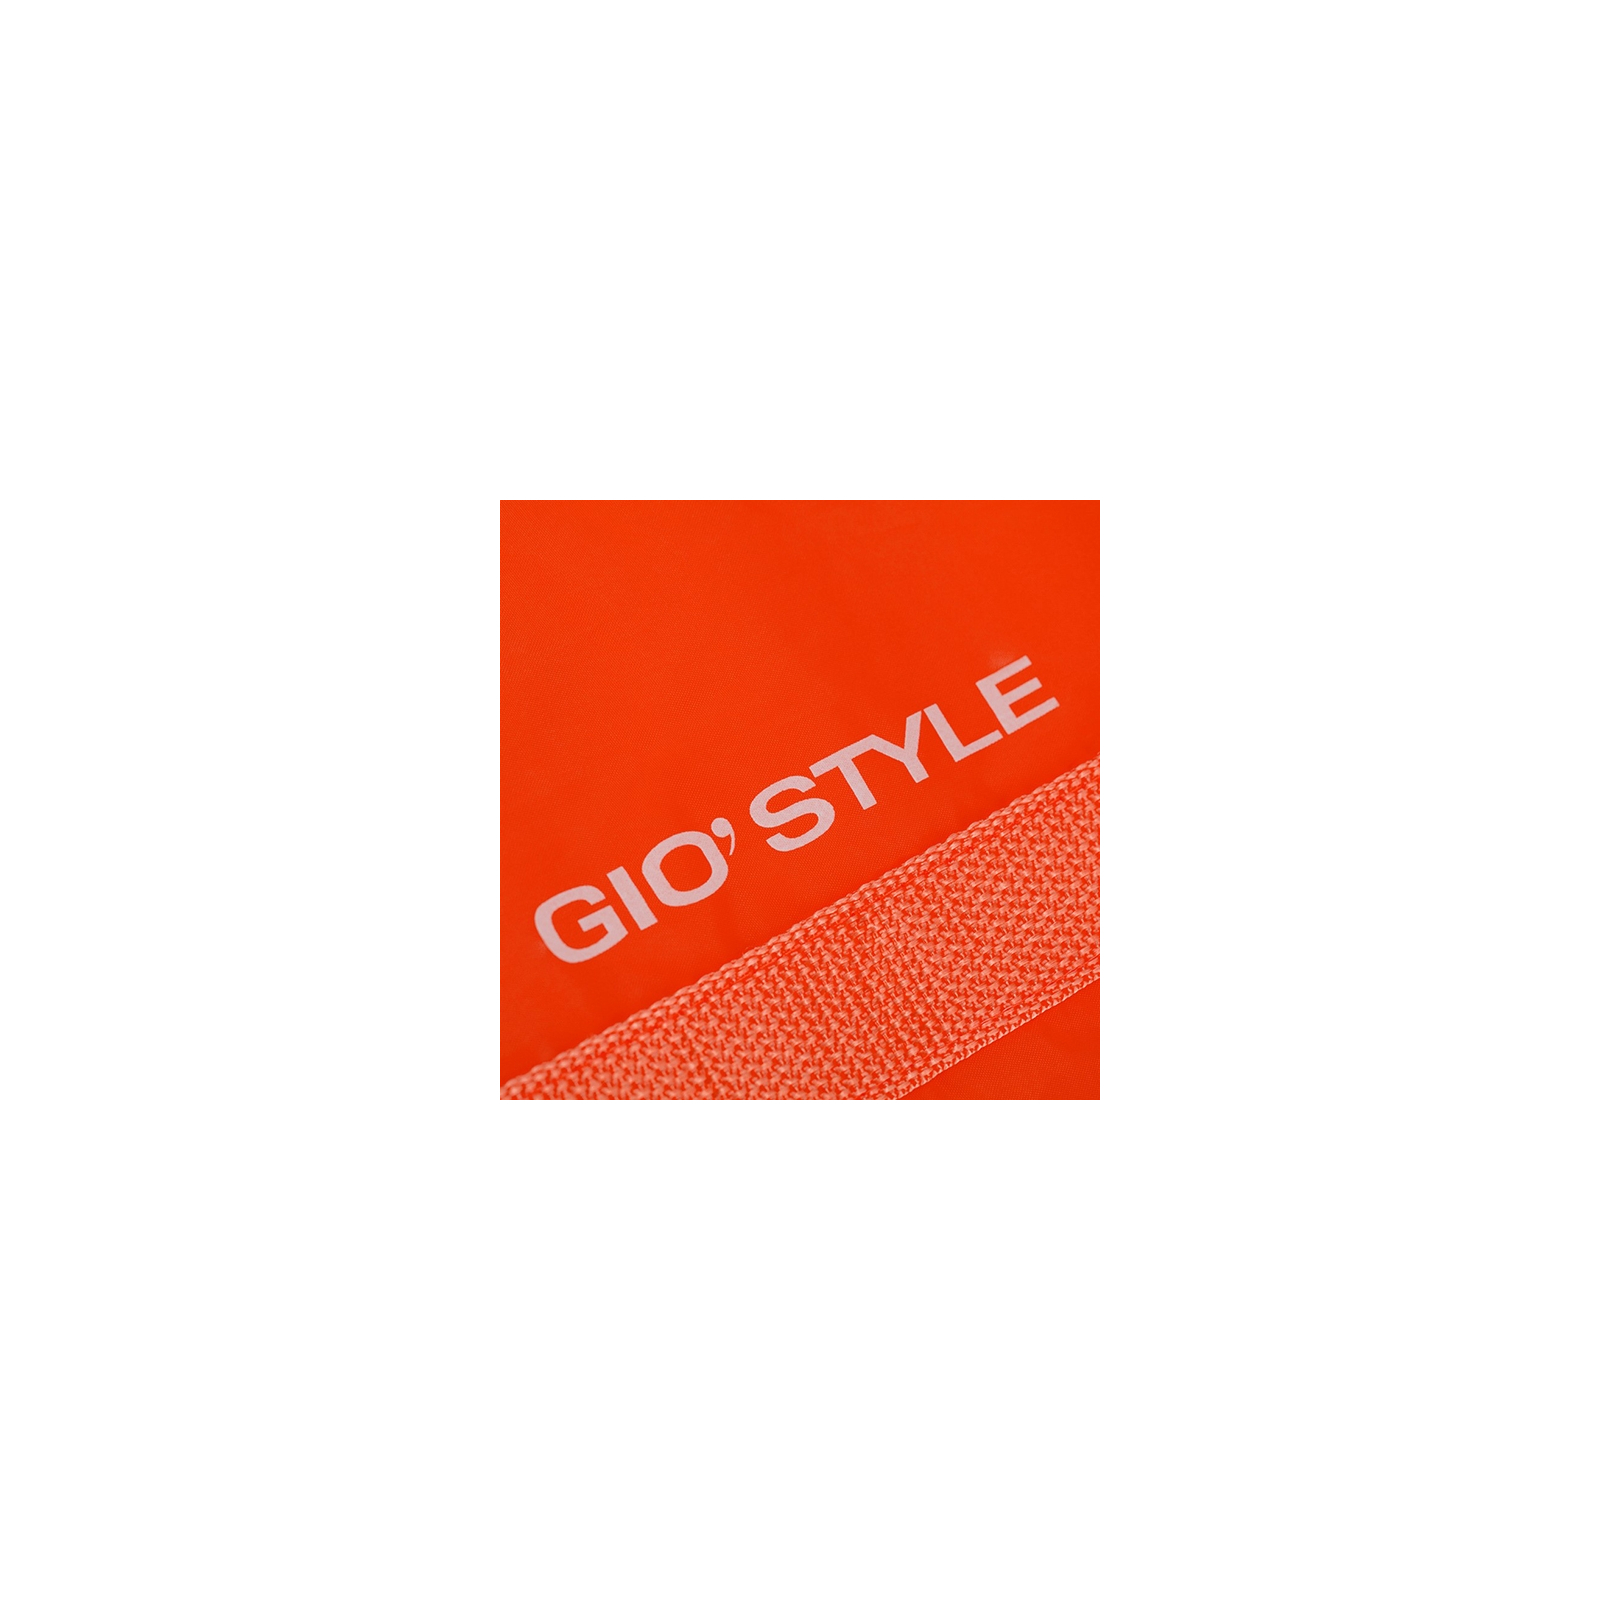 Термосумка Giostyle Fiesta Vertical Lime 25 л (4823082715794) изображение 5